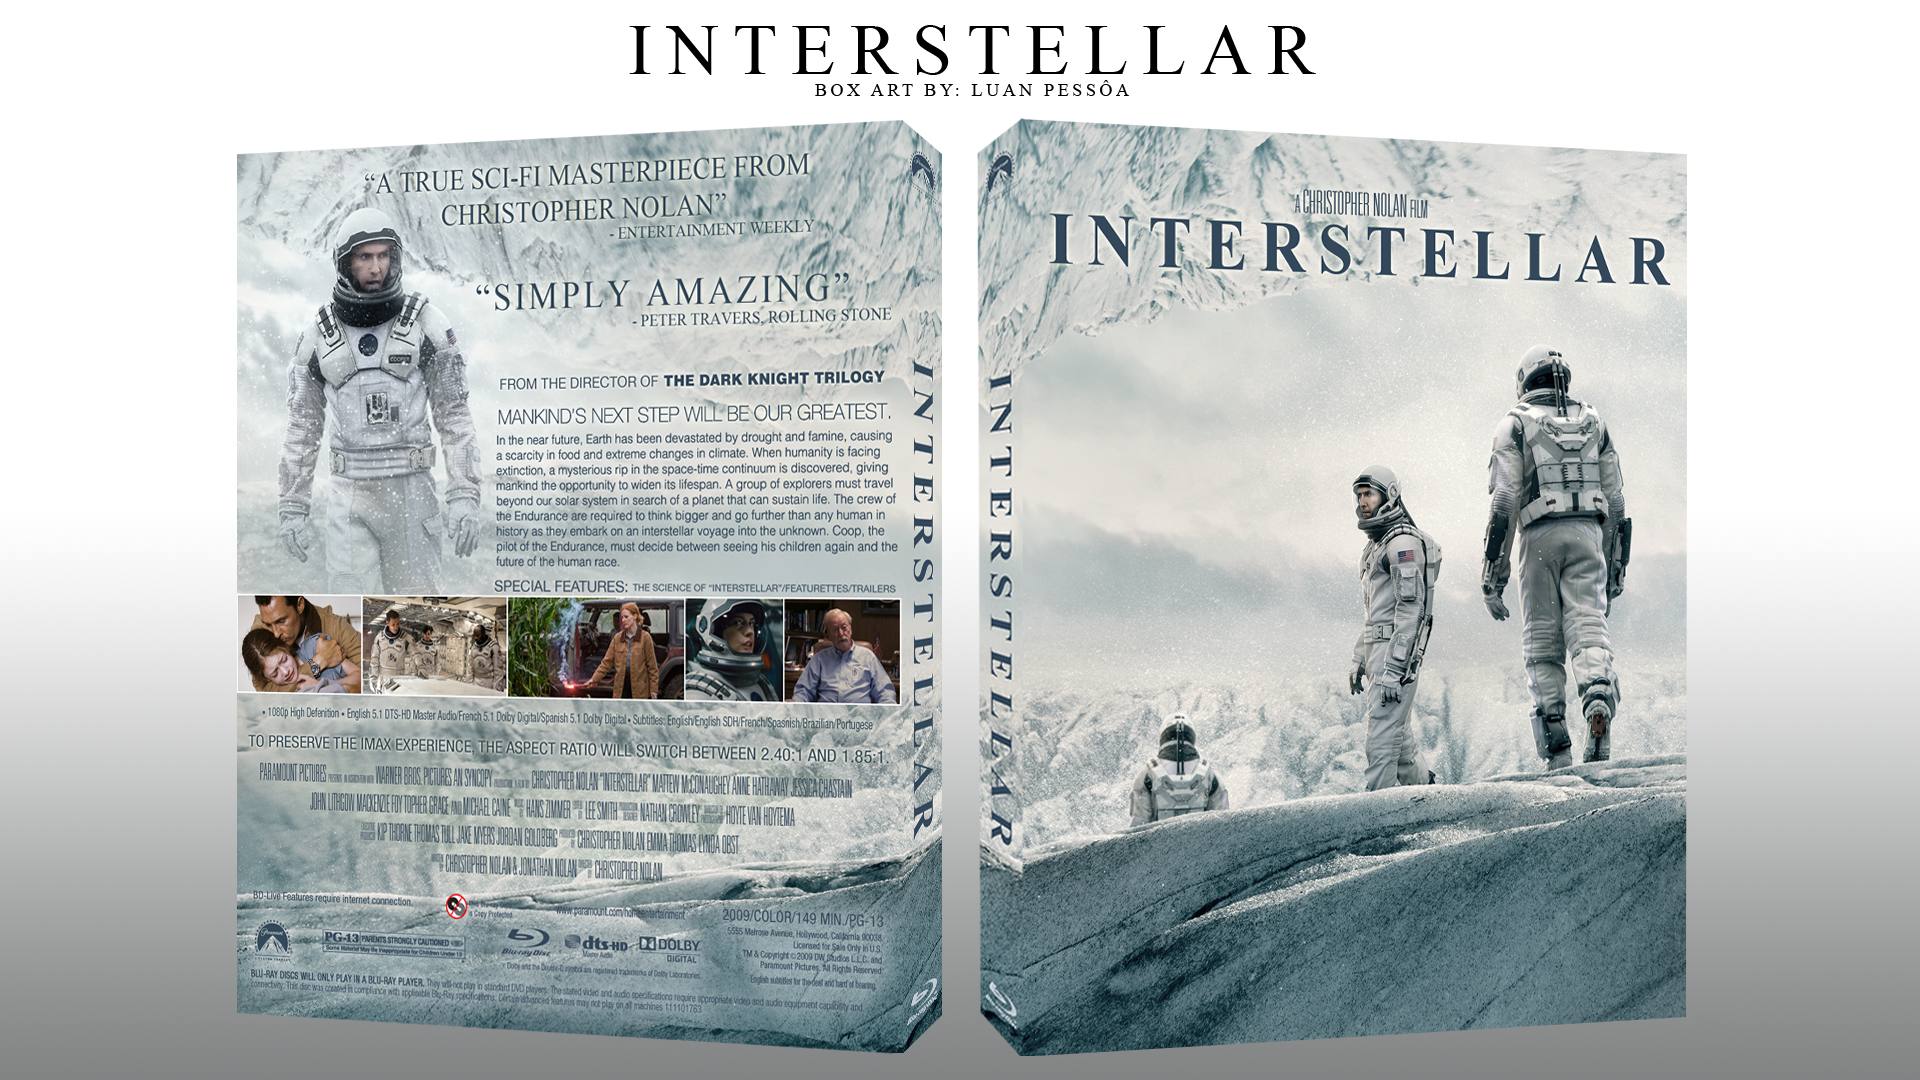 Interstellar box cover